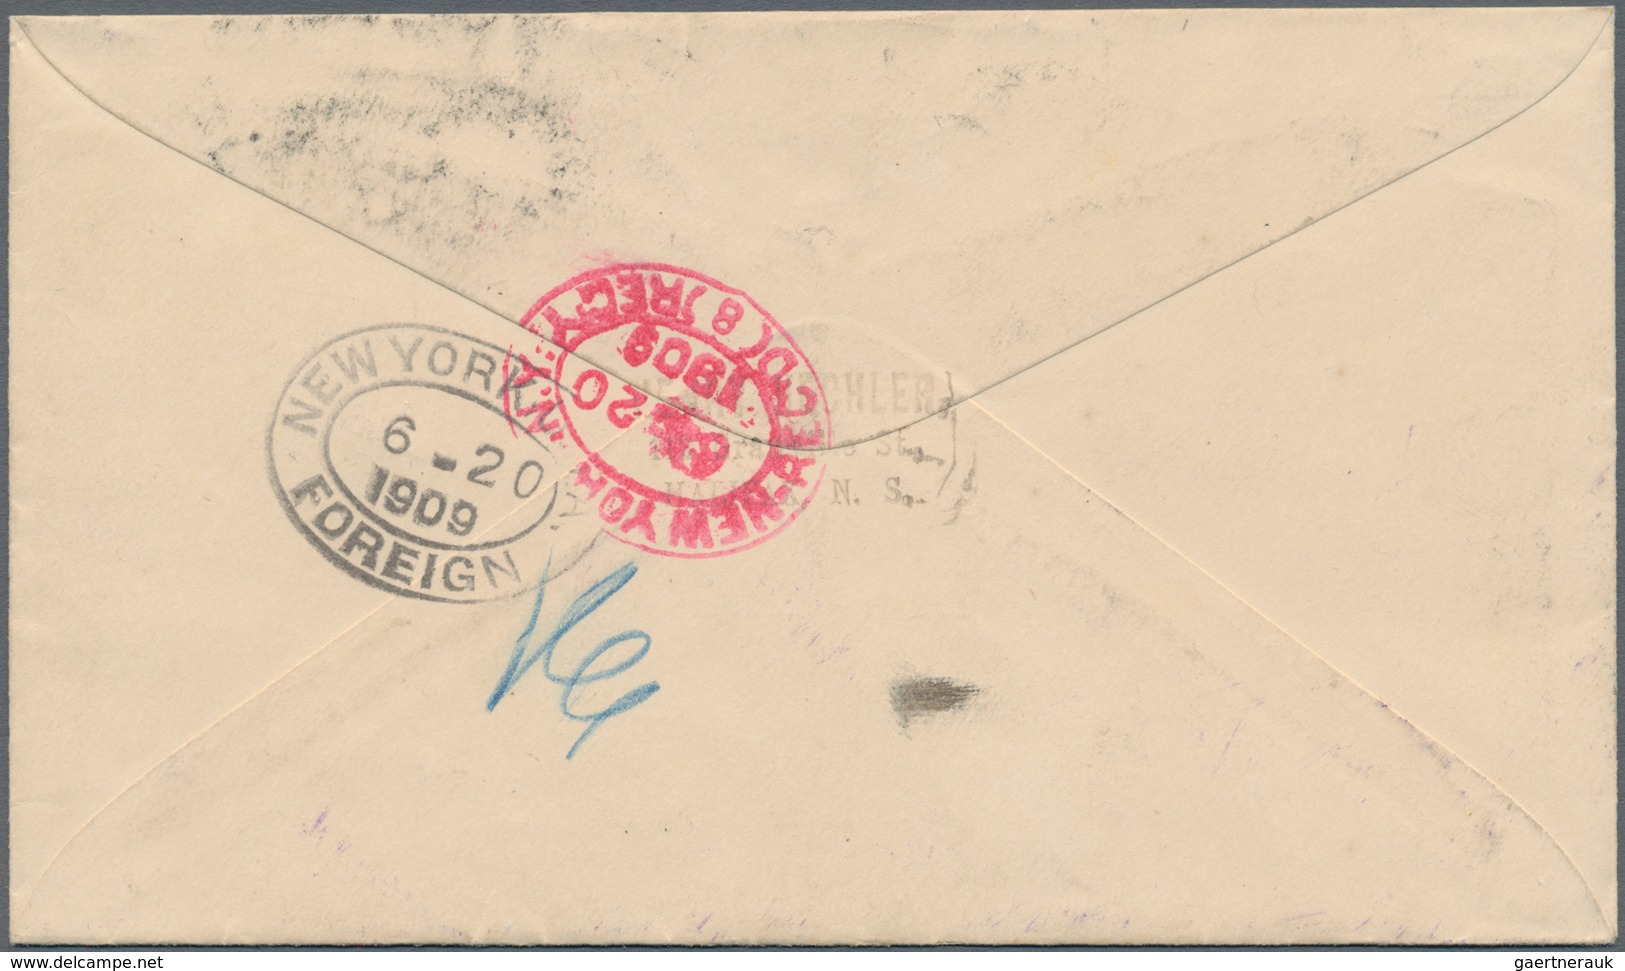 Canada - Ganzsachen: 1909, Envelope KEVII 1 C. Uprated Total 9 C. Canc. "HALIFAX JUN 18 09" Register - 1860-1899 Regering Van Victoria